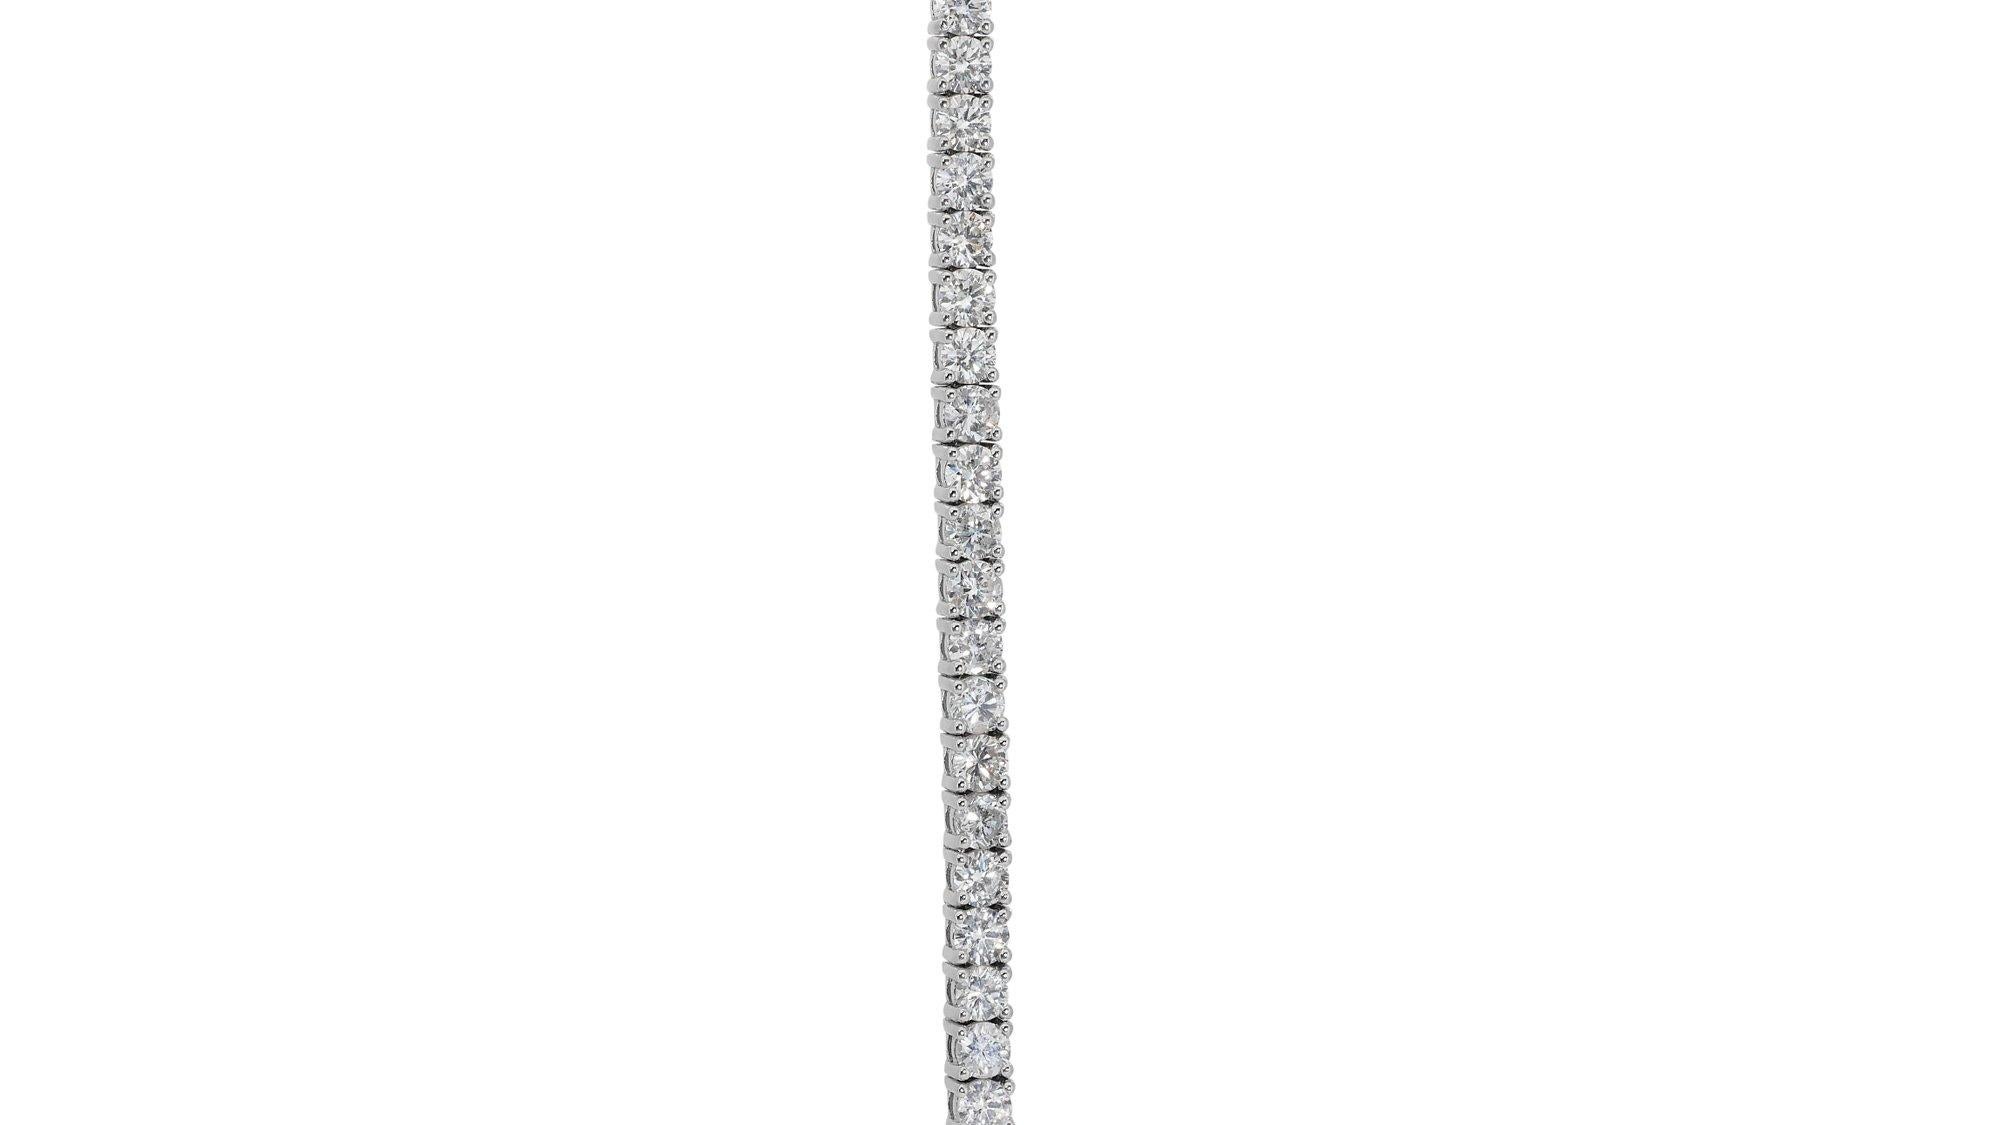 Women's Ravishing 18k White Gold Bracelet w/ 6.02 ct Natural Diamonds IGI Certificate For Sale